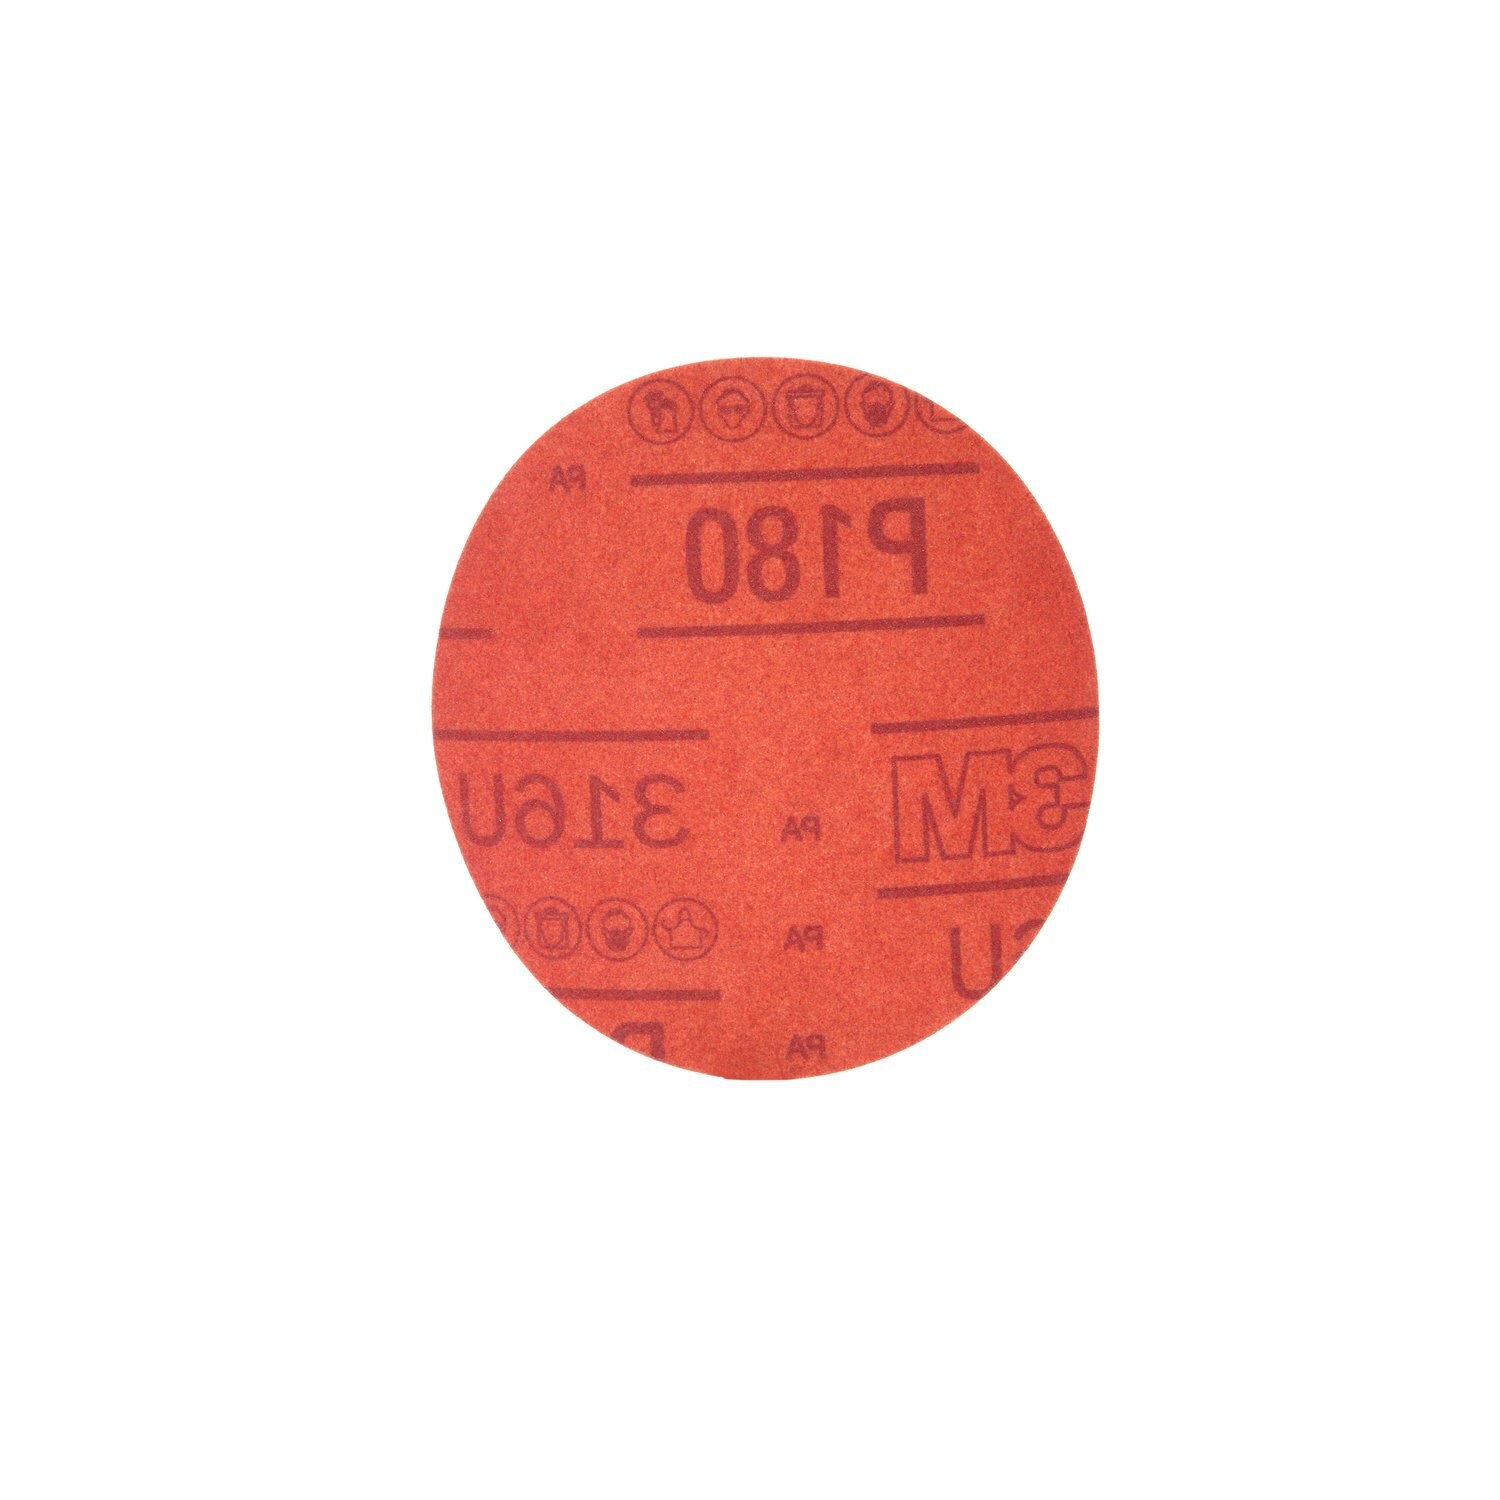 7000119854 - 3M Hookit Red Abrasive Disc, 01298, 5 in, P180, 50 discs per carton, 6
cartons per case